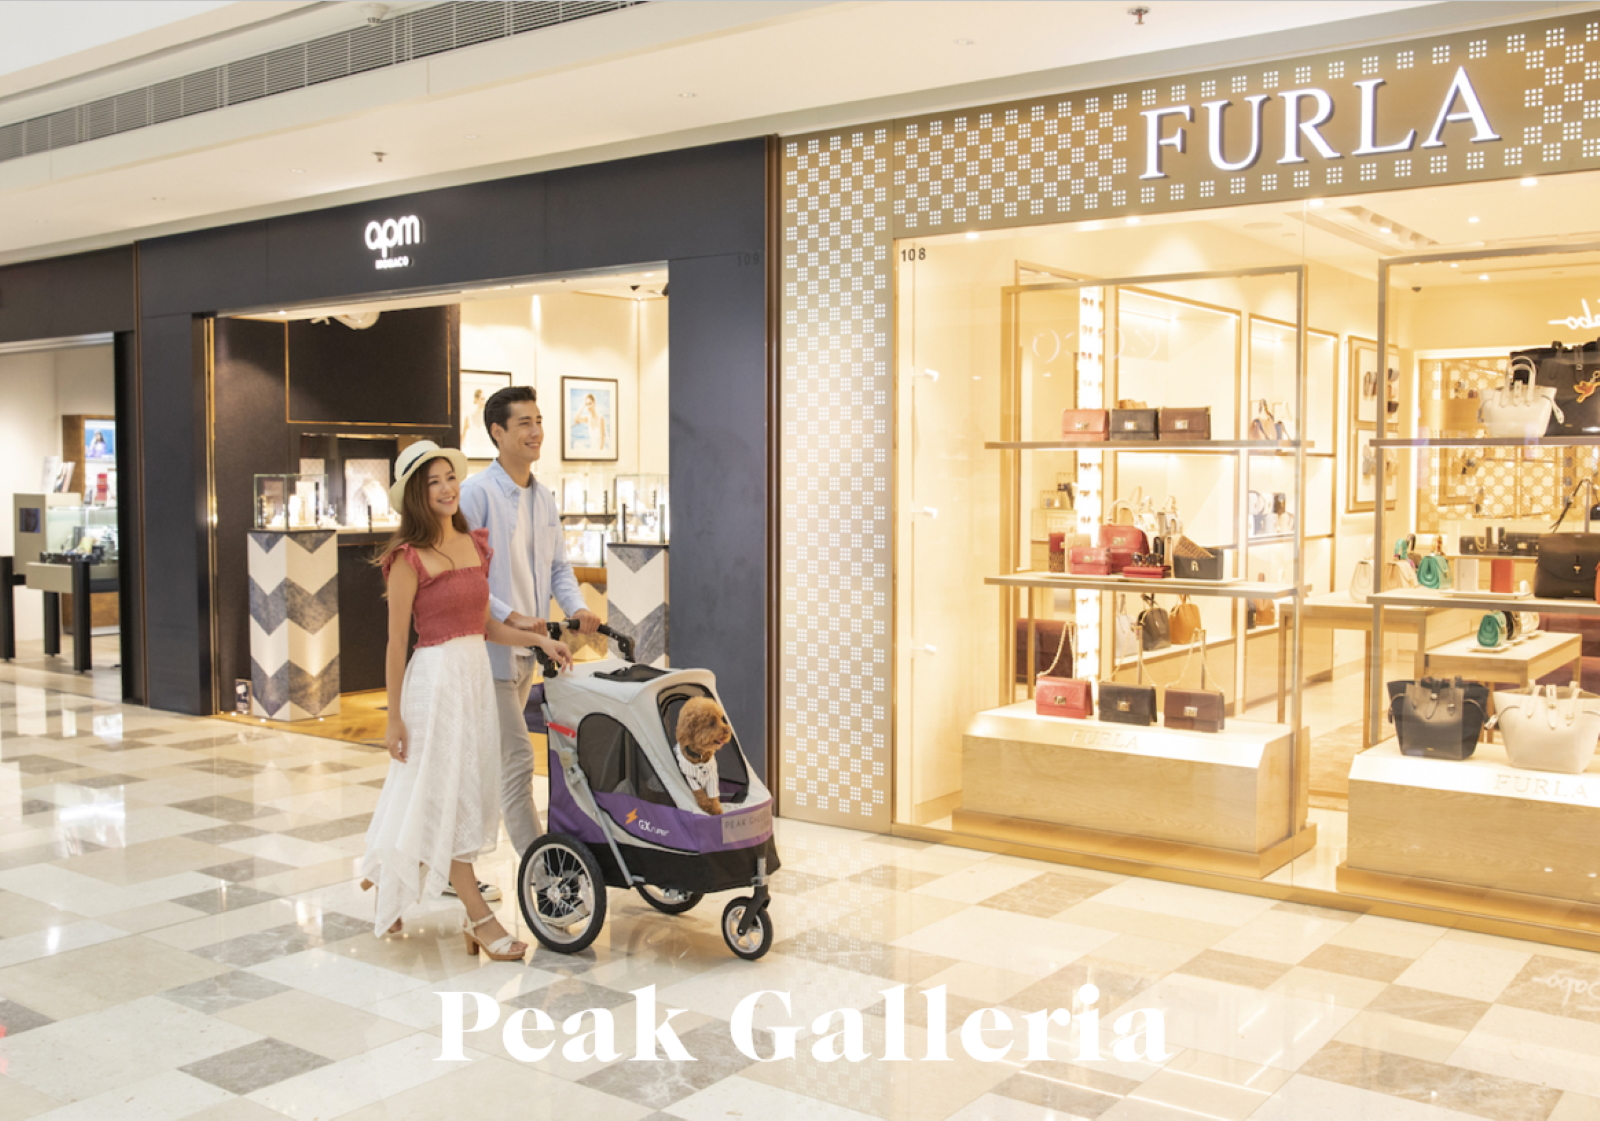 Peak Galleria retail tour chine missions mmm 0